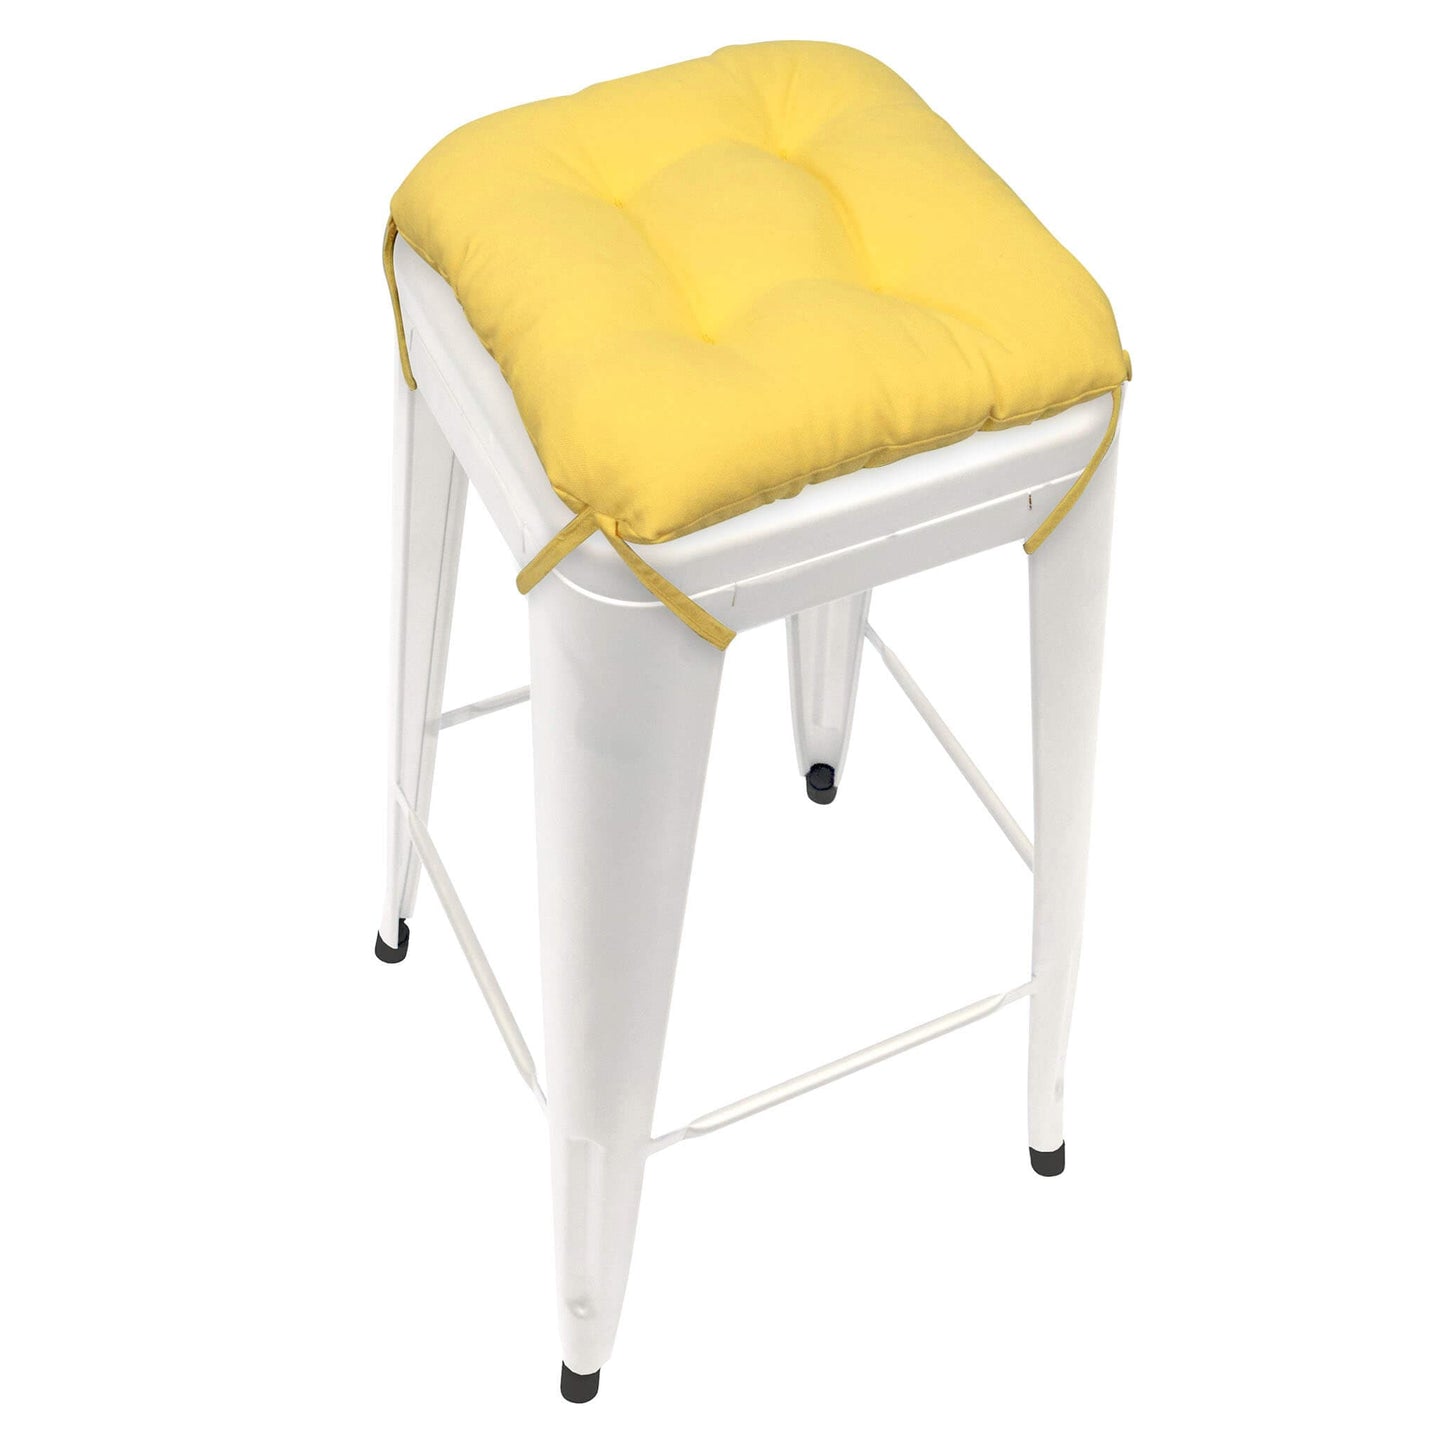 Cotton Duck Yellow Square Industrial Bar Stool Cushion - Latex Foam Fill - Barnett Home Decor 